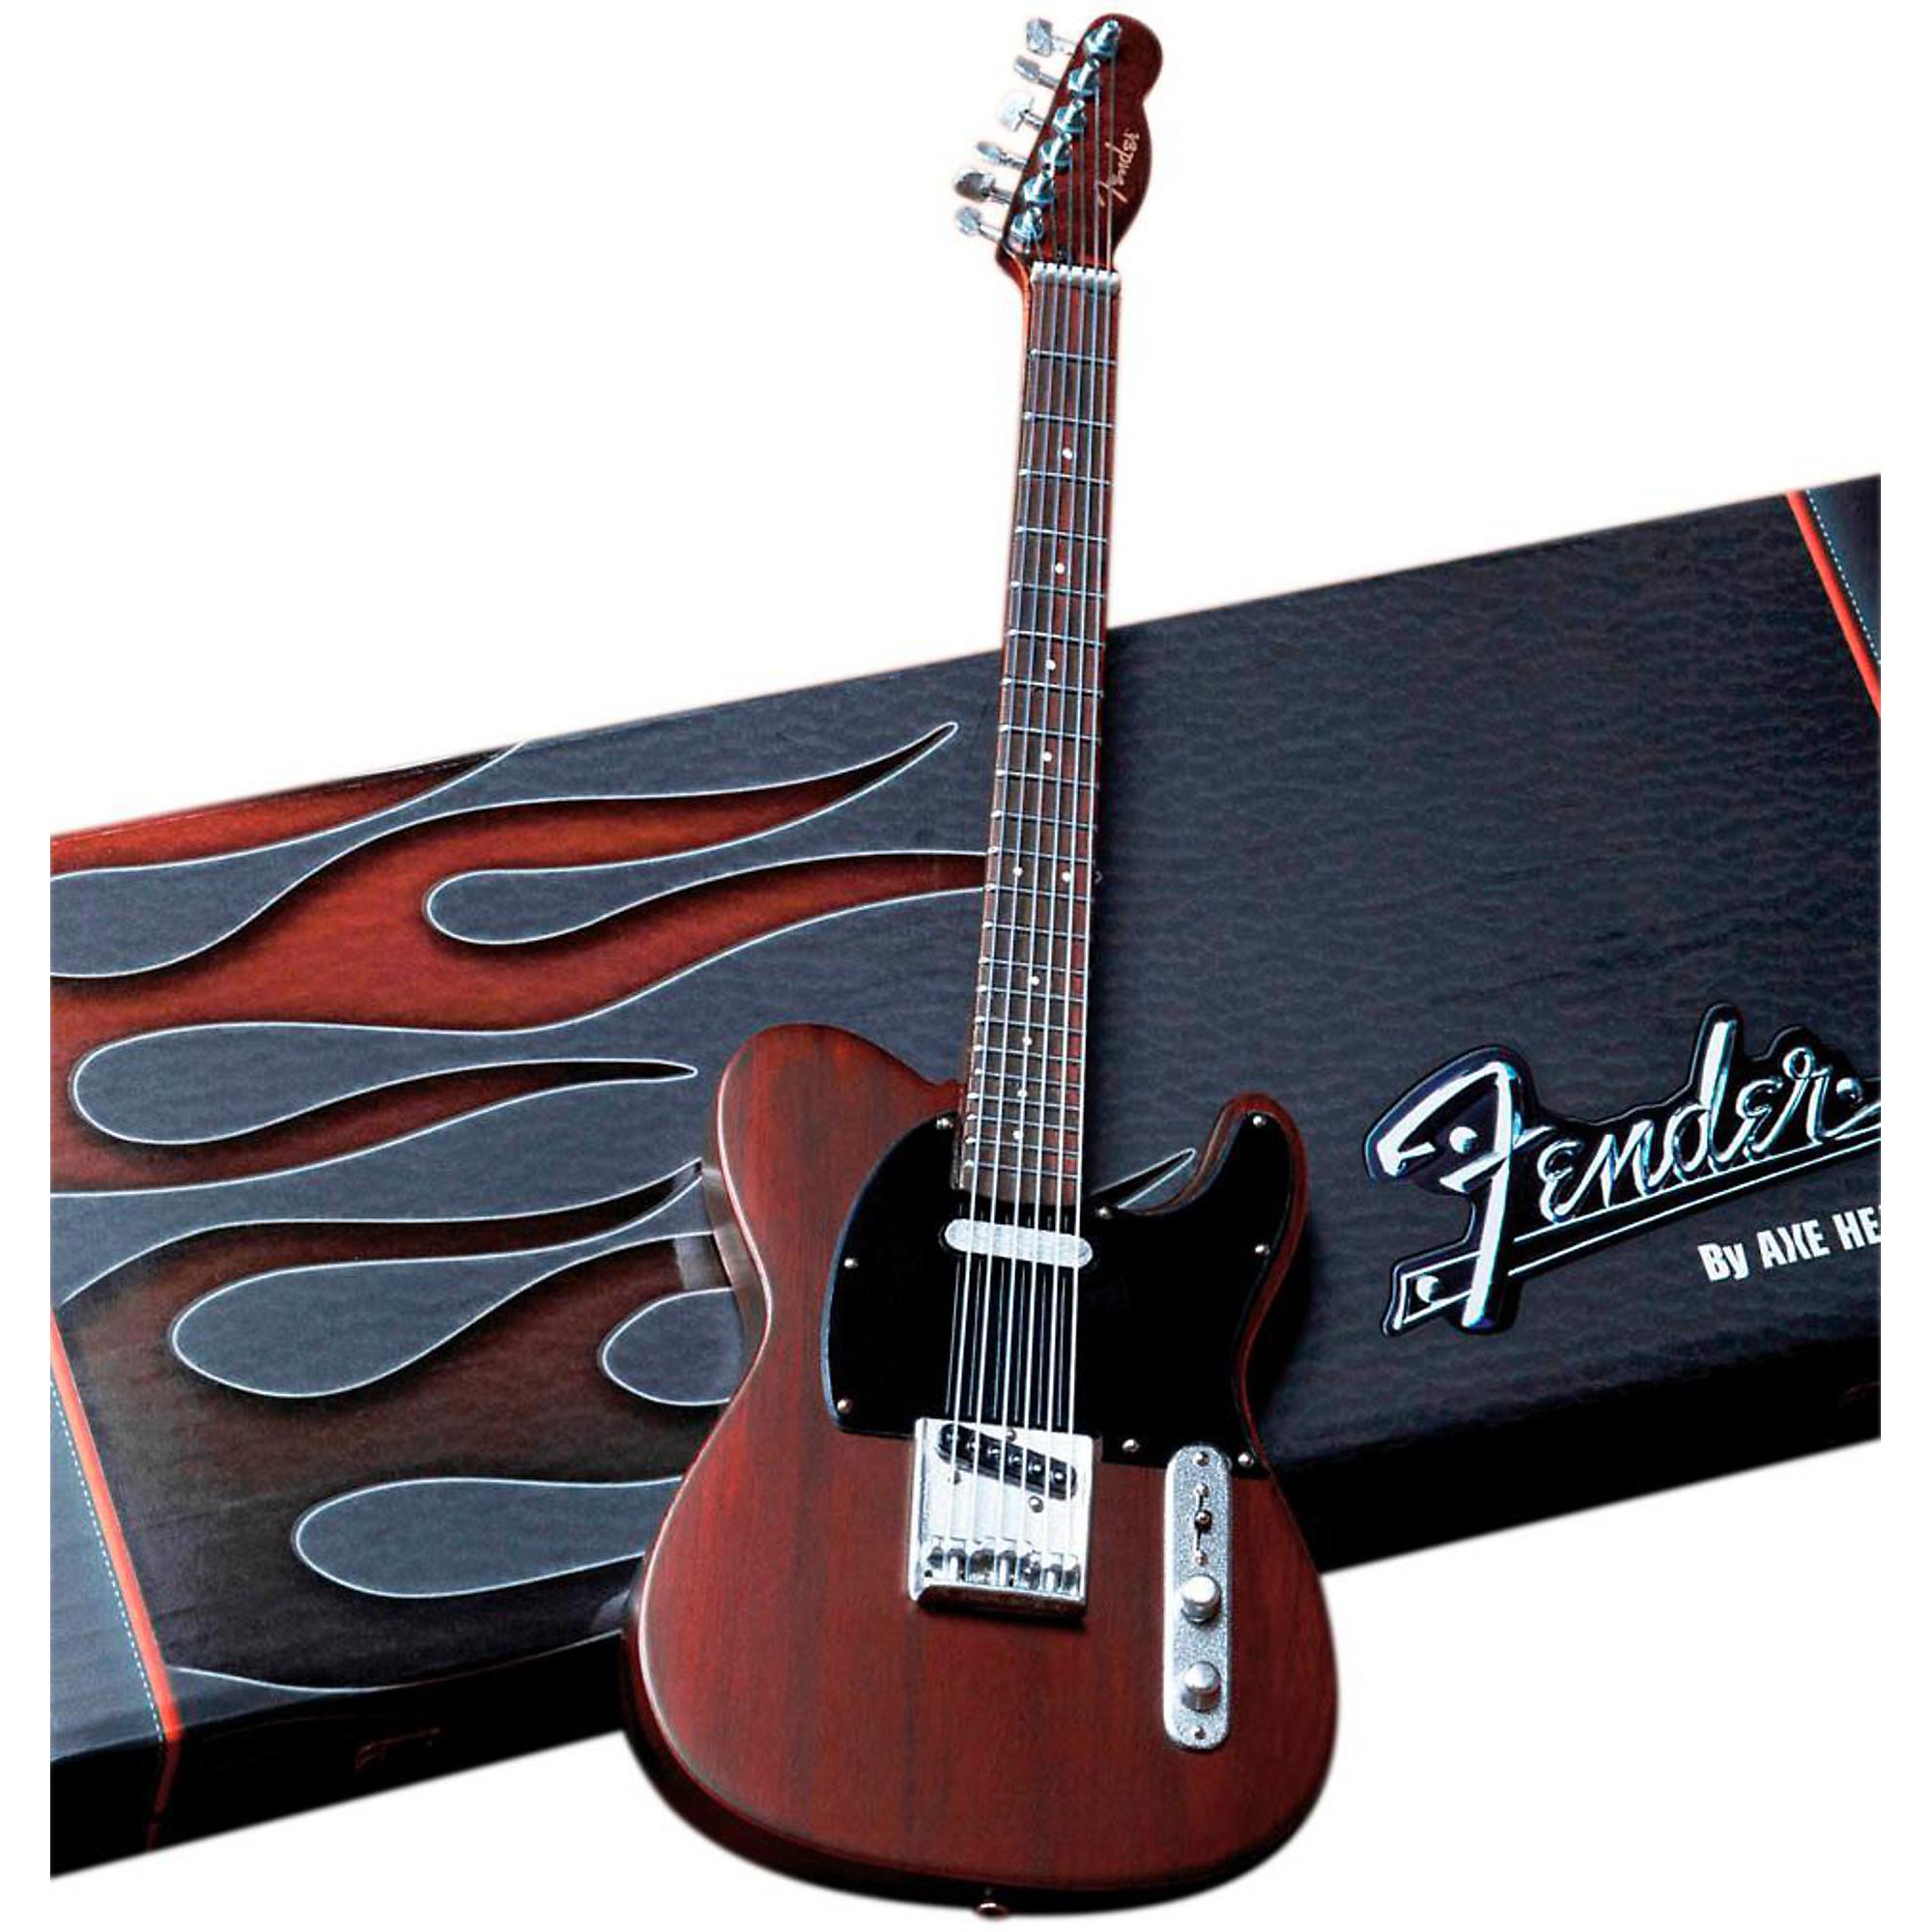 Axe Heaven Fender Telecaster Rosewood Miniature Guitar Replica